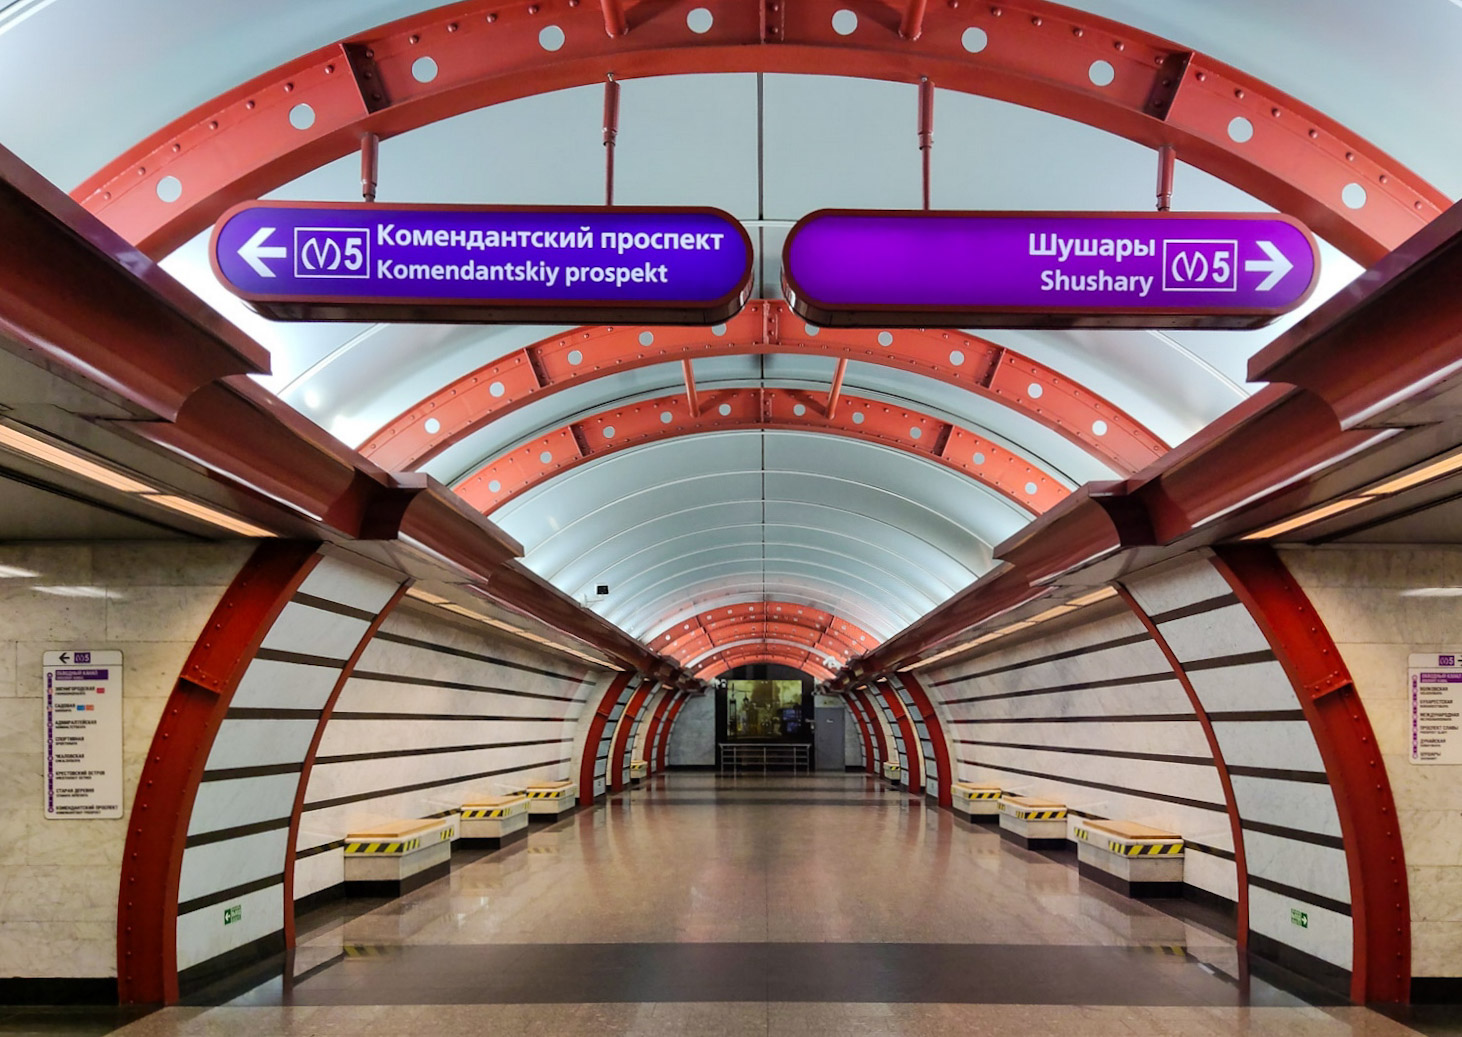 Sankt-Peterburg — Metro — Line 5